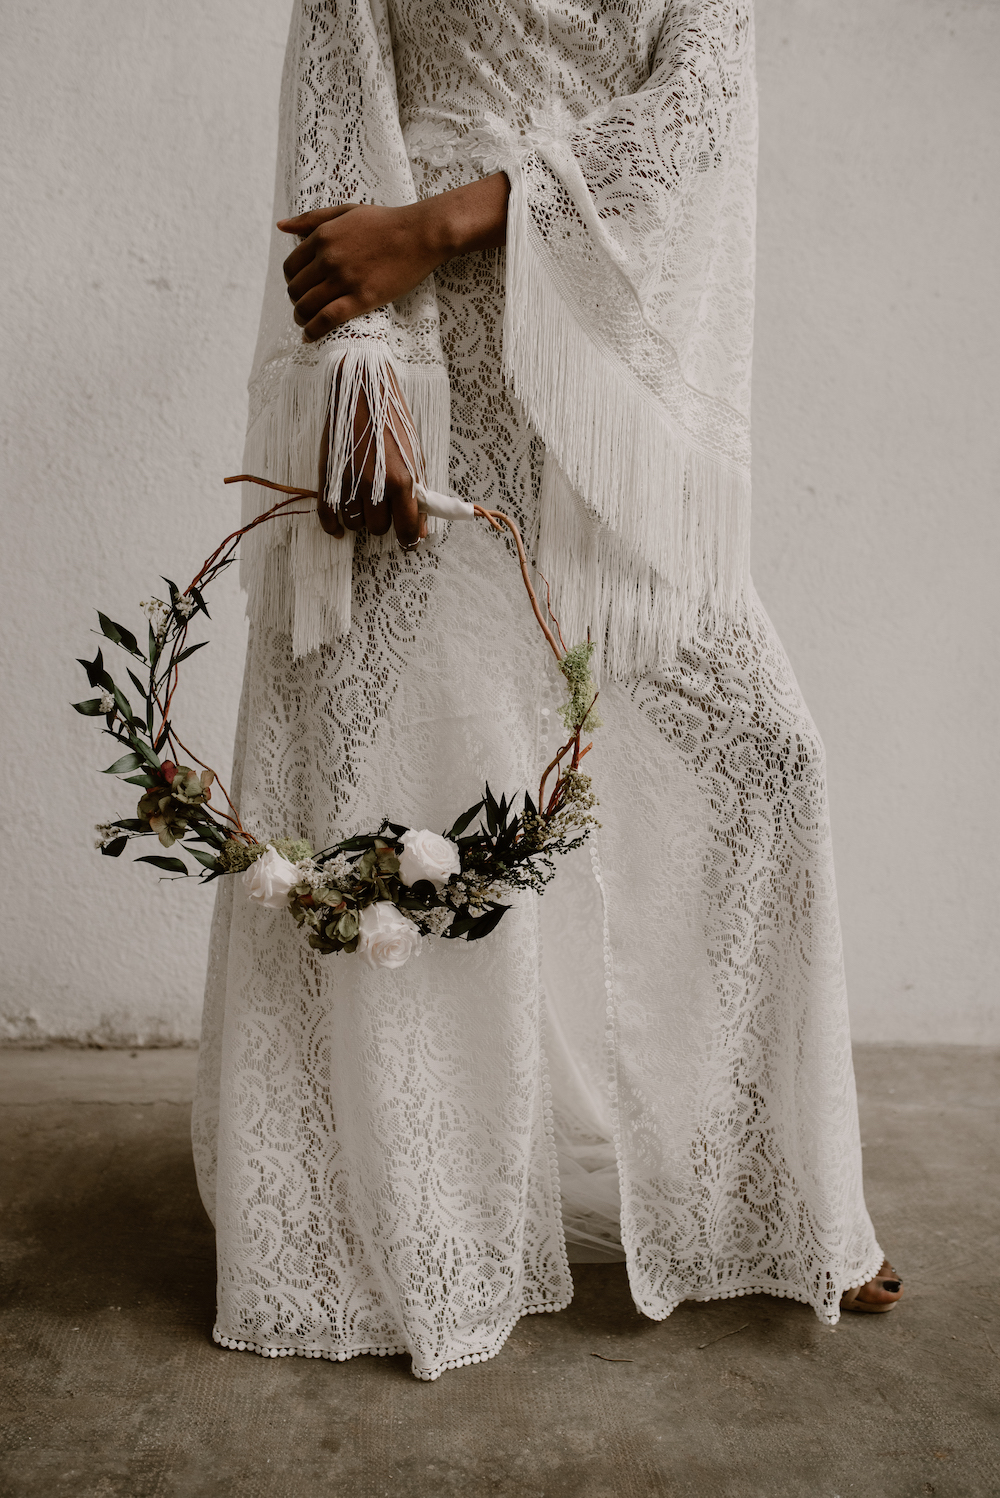 Nikita Nipone Collection 2019 - Robes de mariée - Blog Mariage Madame C